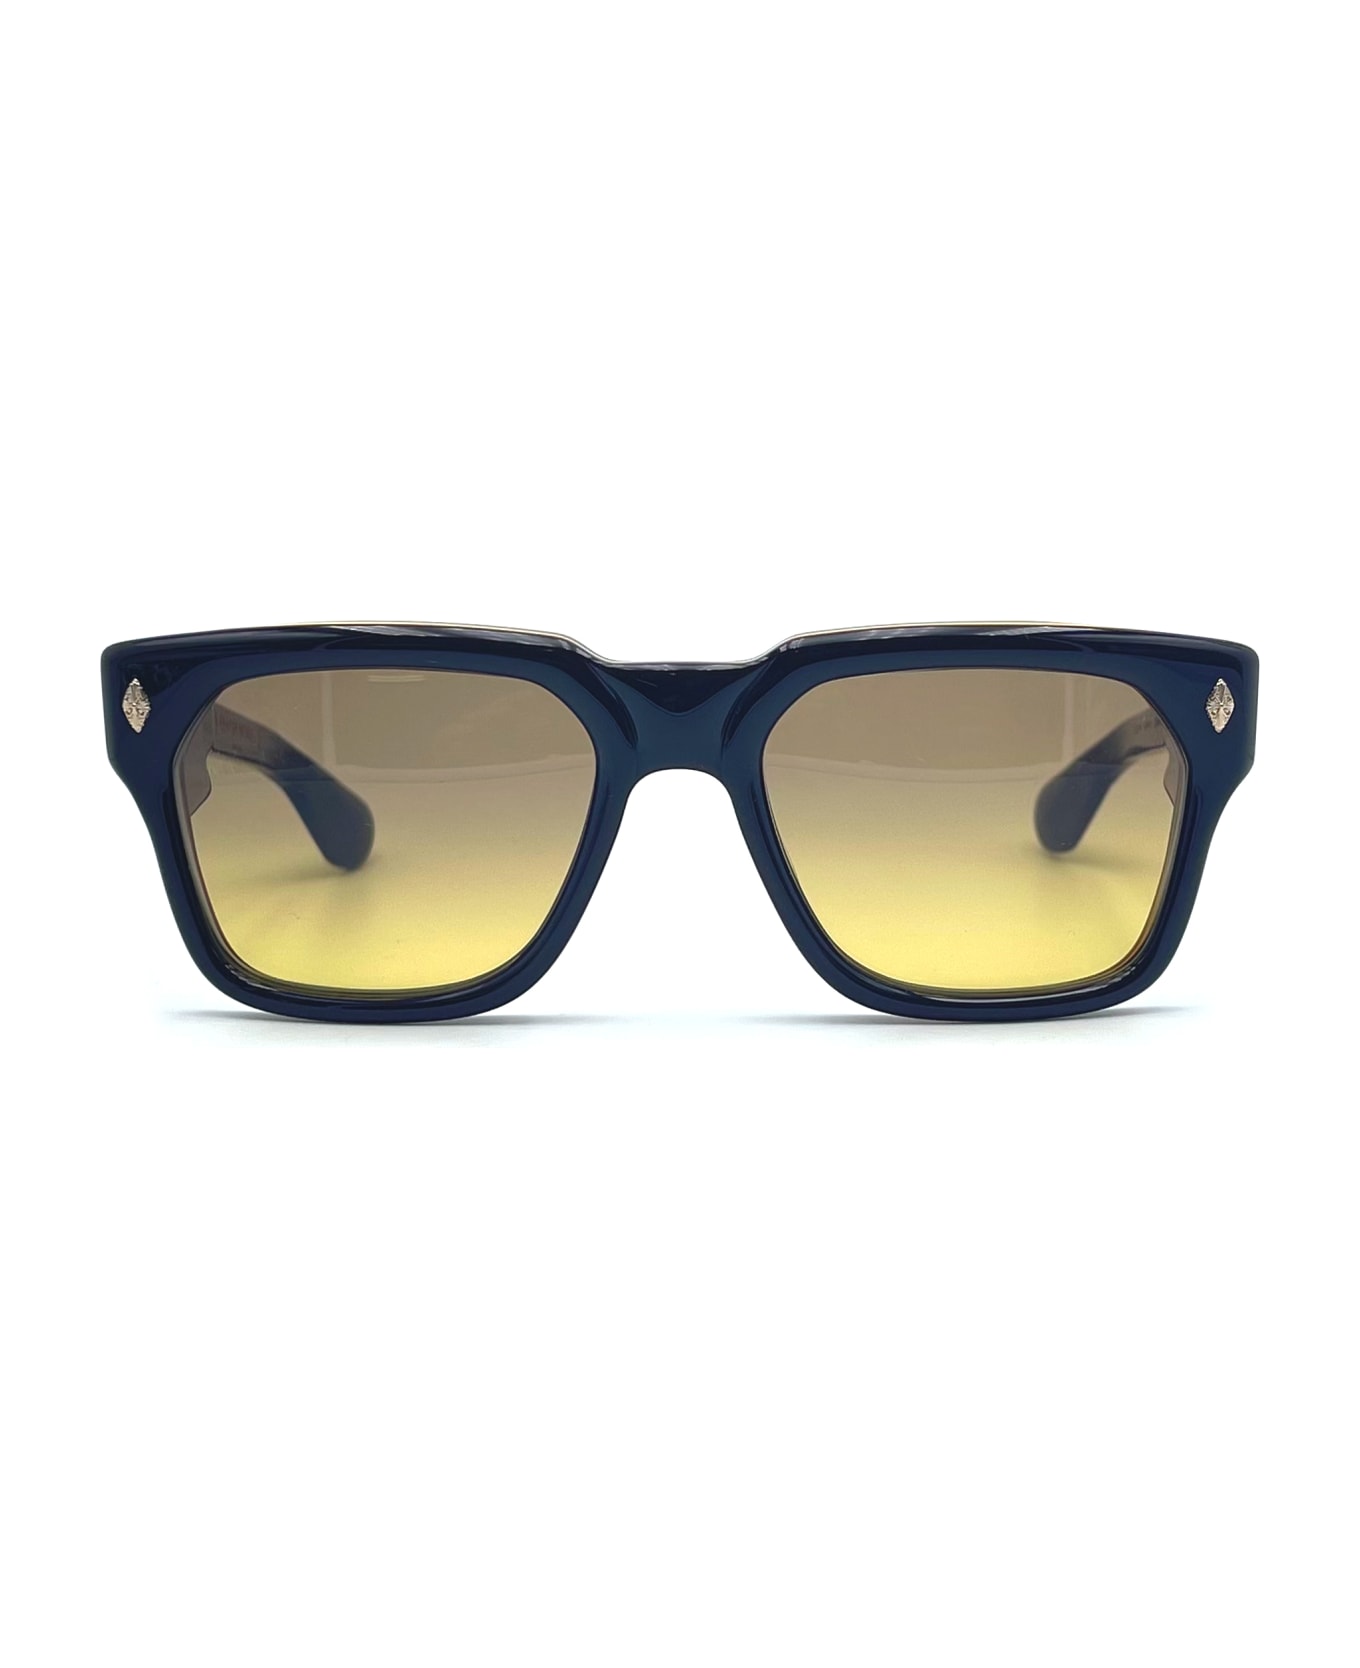 Chrome Hearts Sniffer - Pinto Bvlgari sunglasses - brown